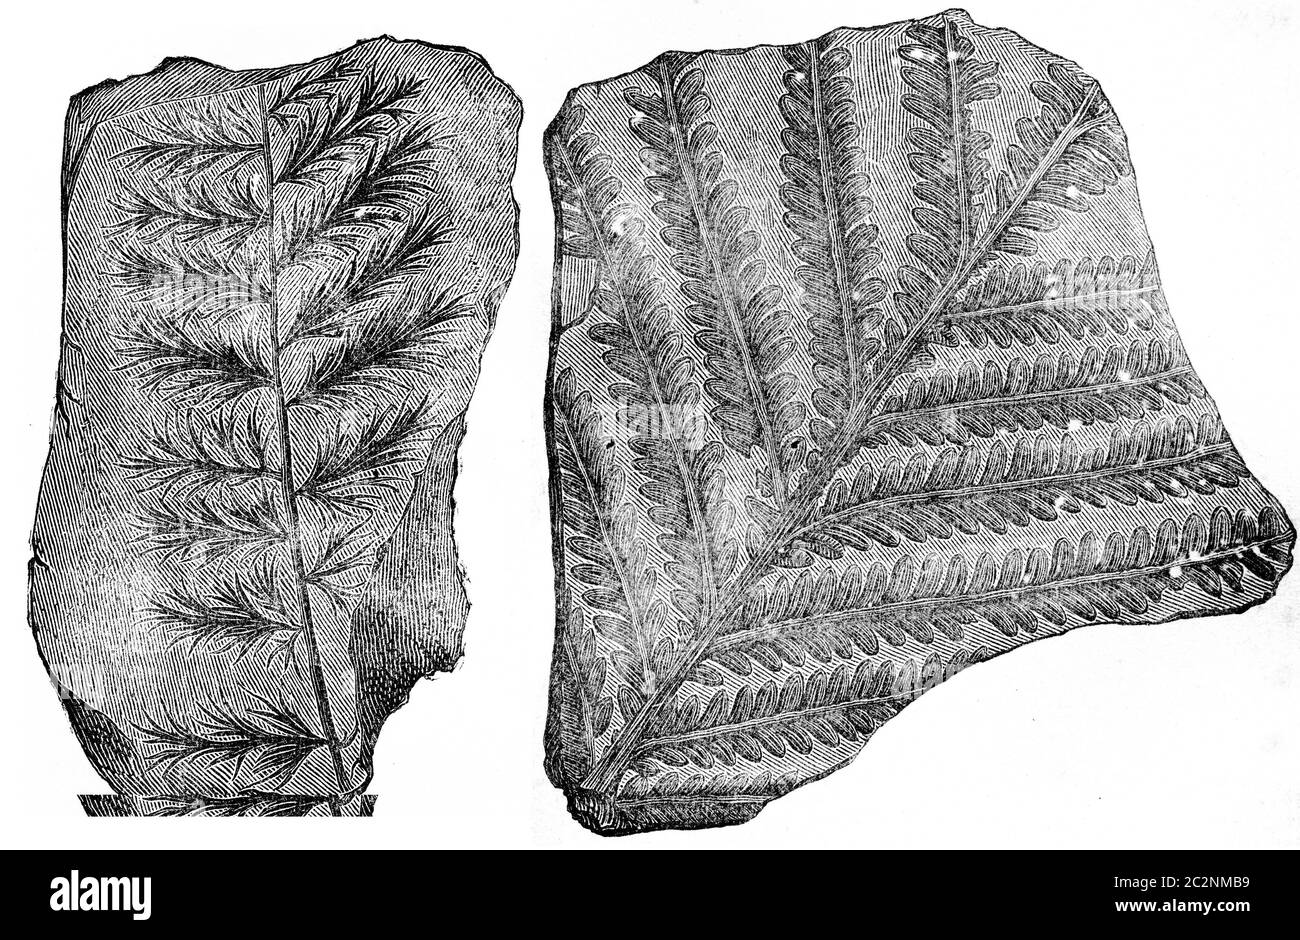 Palm fossil ferns. (Sphenopteris acutiloba, Callipteris conferta), vintage engraved illustration. Earth before man – 1886. Stock Photo